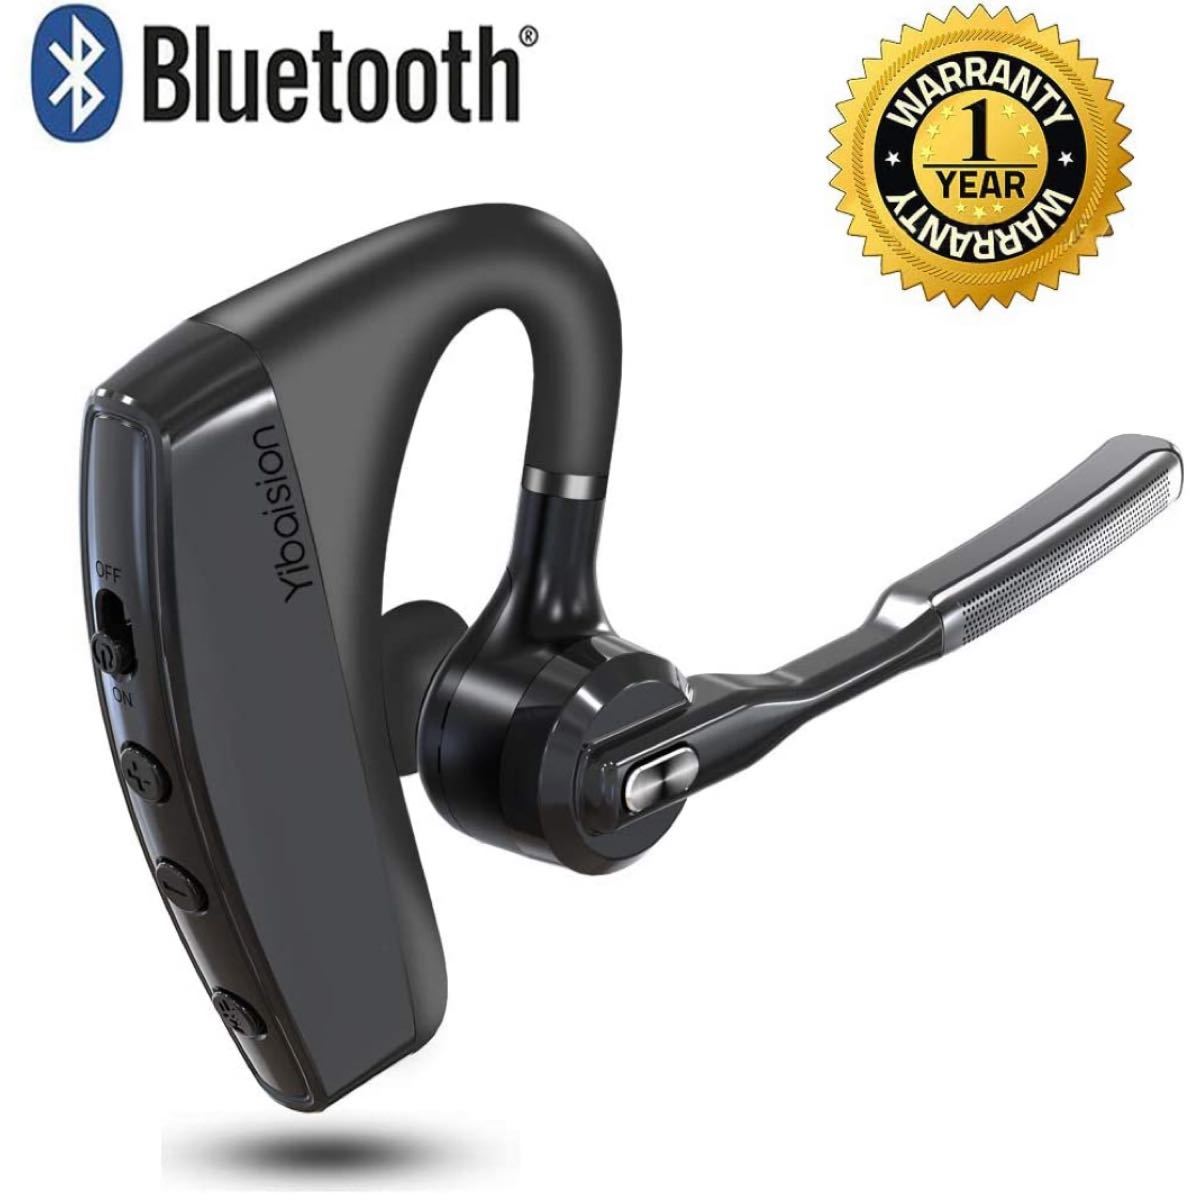 Bluetoothヘッドセット ハンズフリー通話